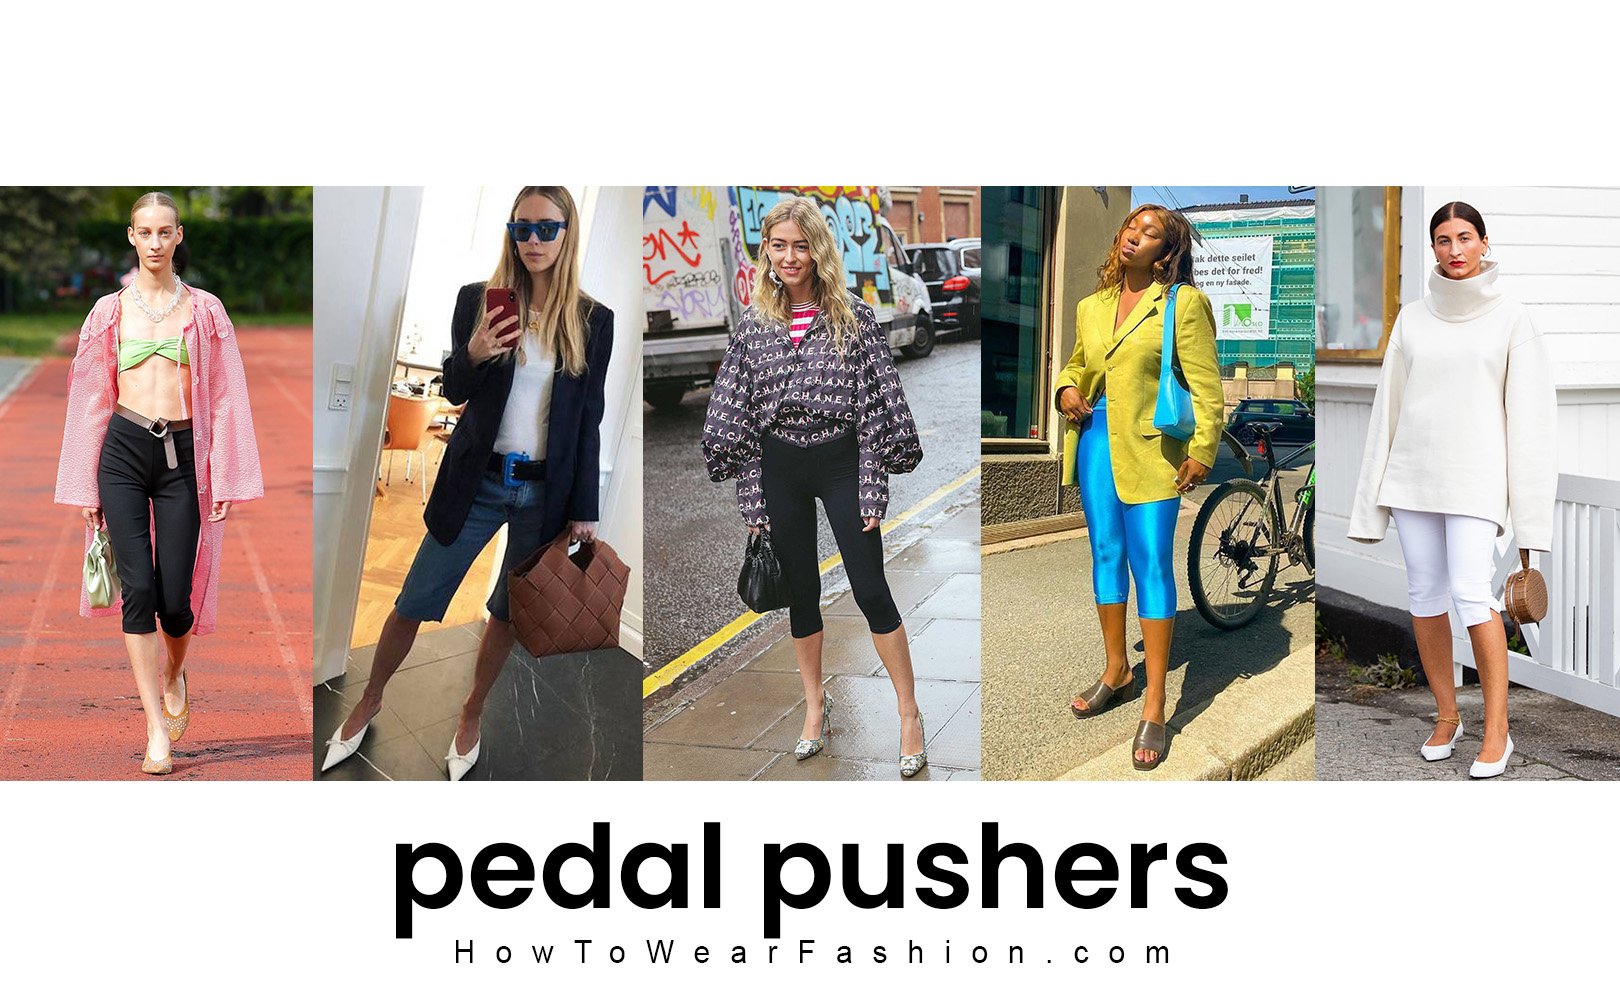 Pedal pushers  HOWTOWEAR Fashion